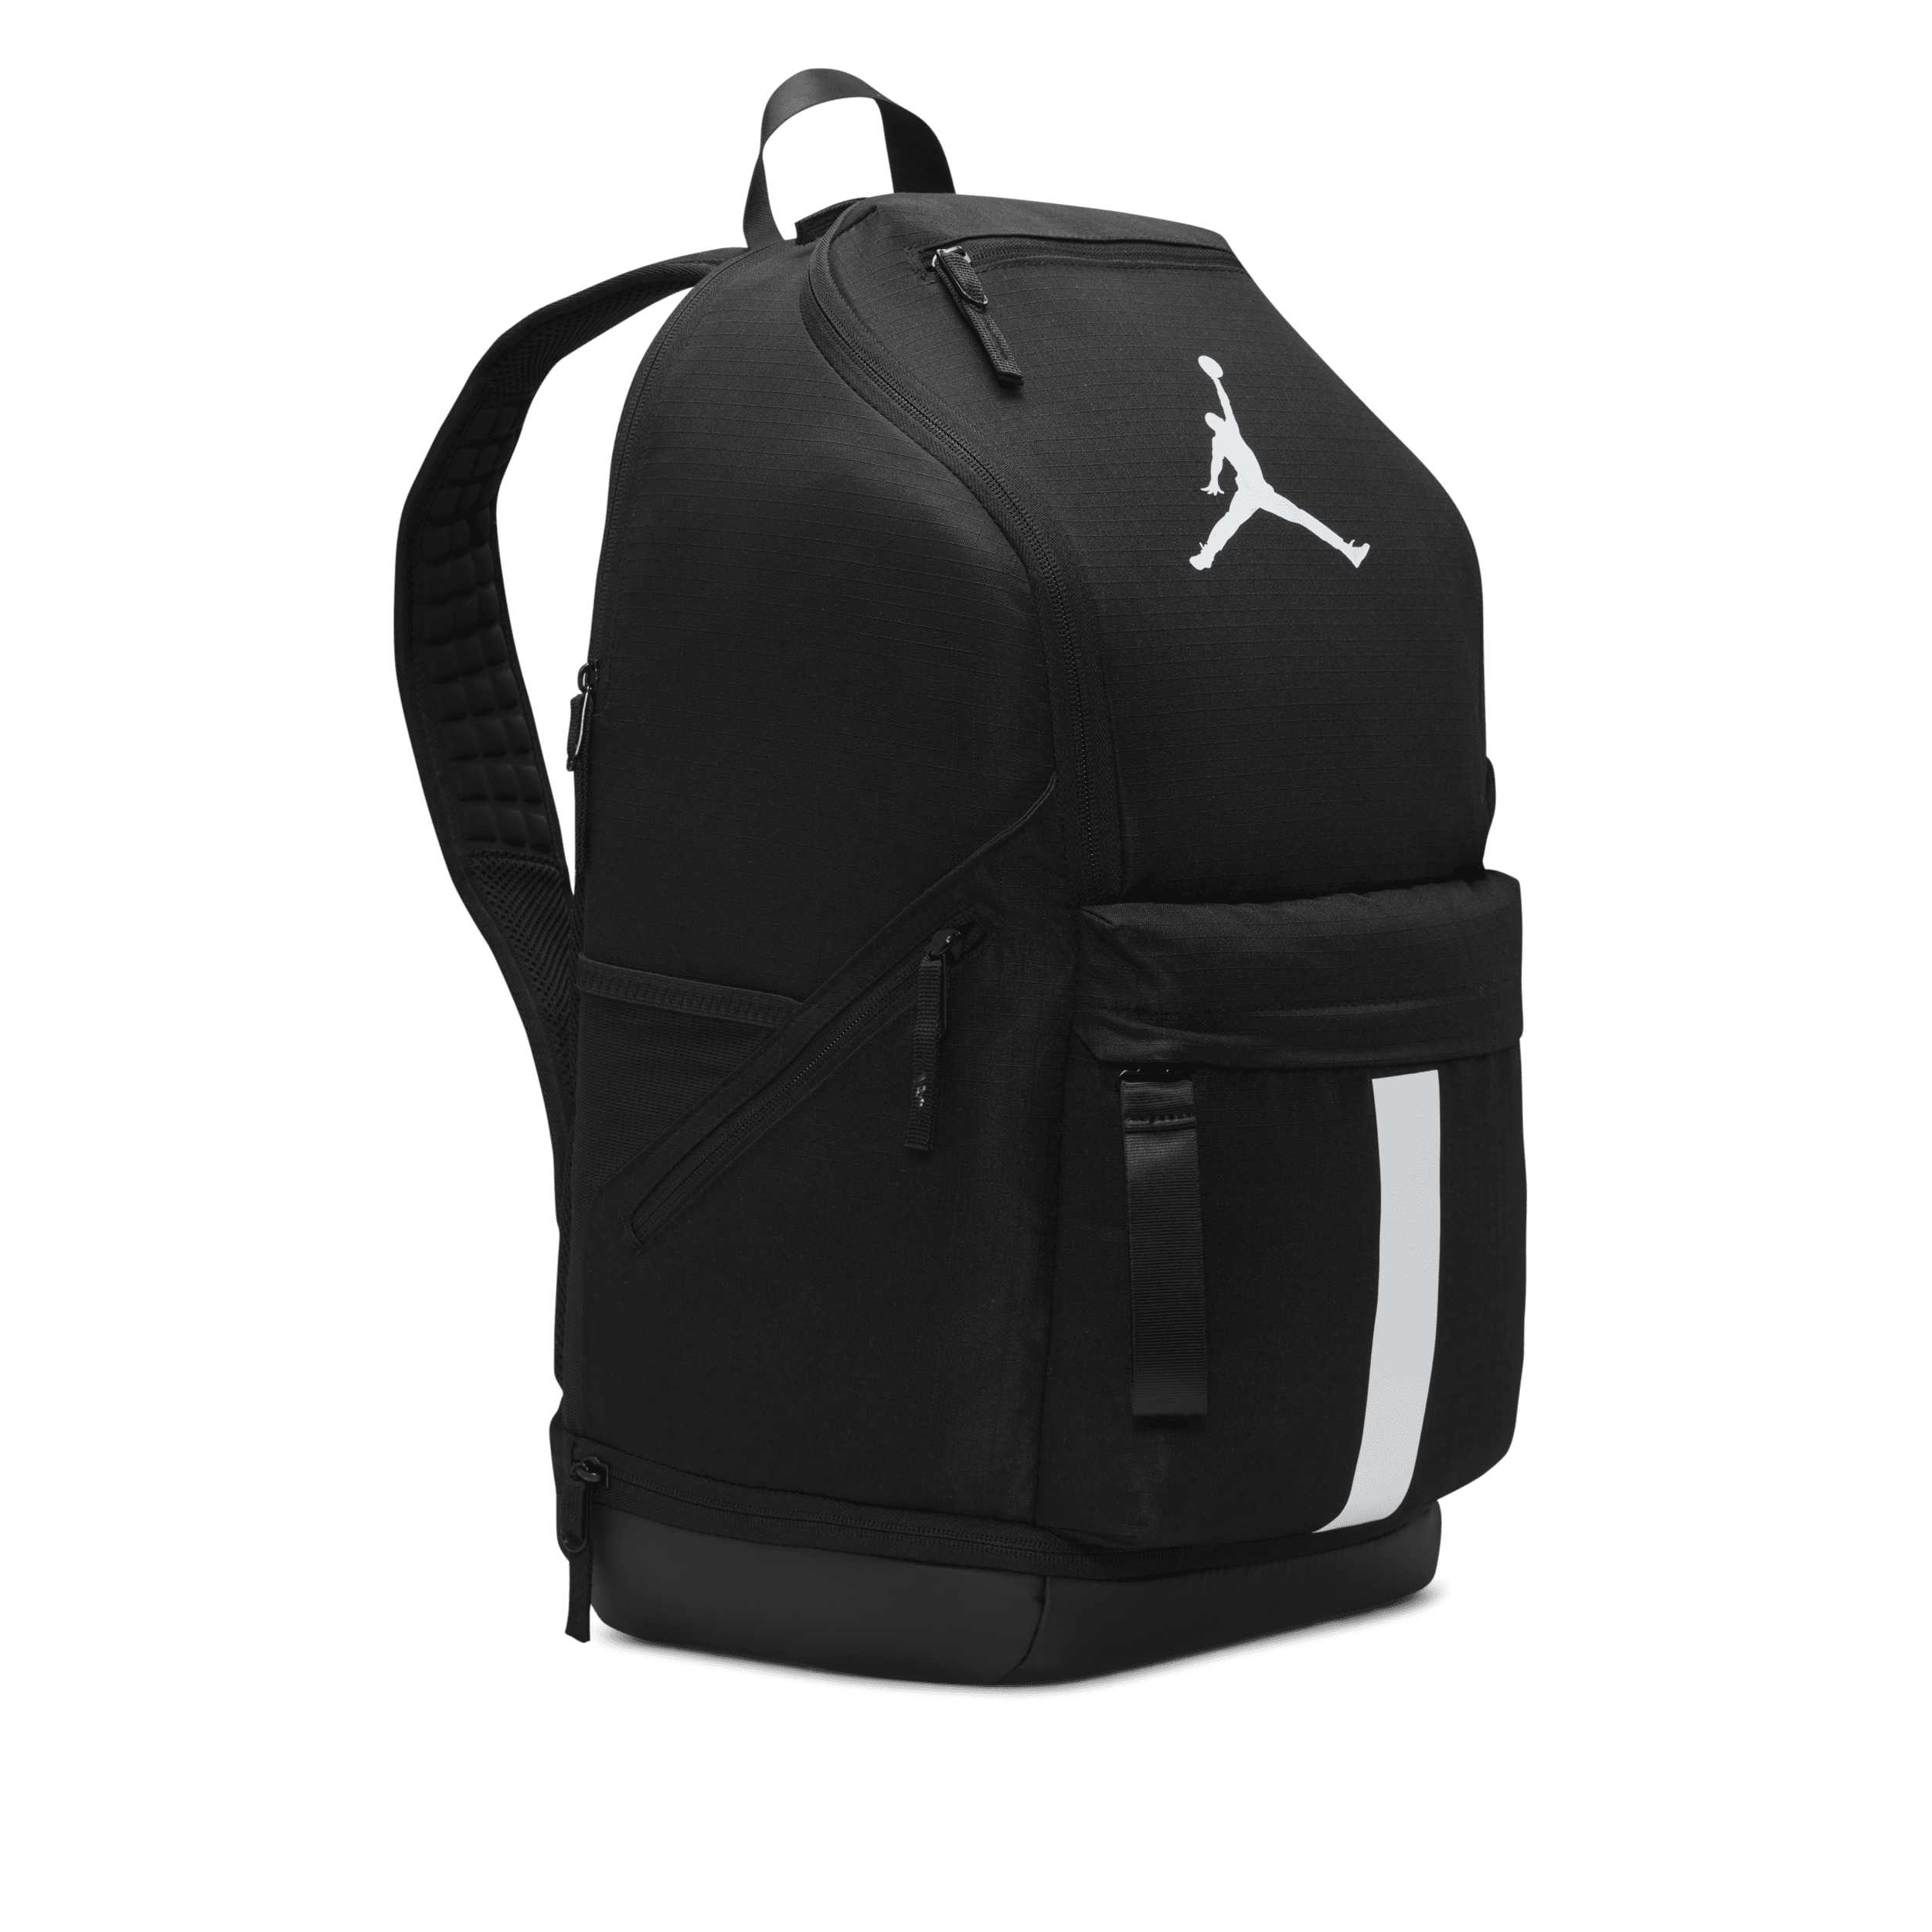 Jordan Velocity Backpack rugzak (38 liter) Zwart